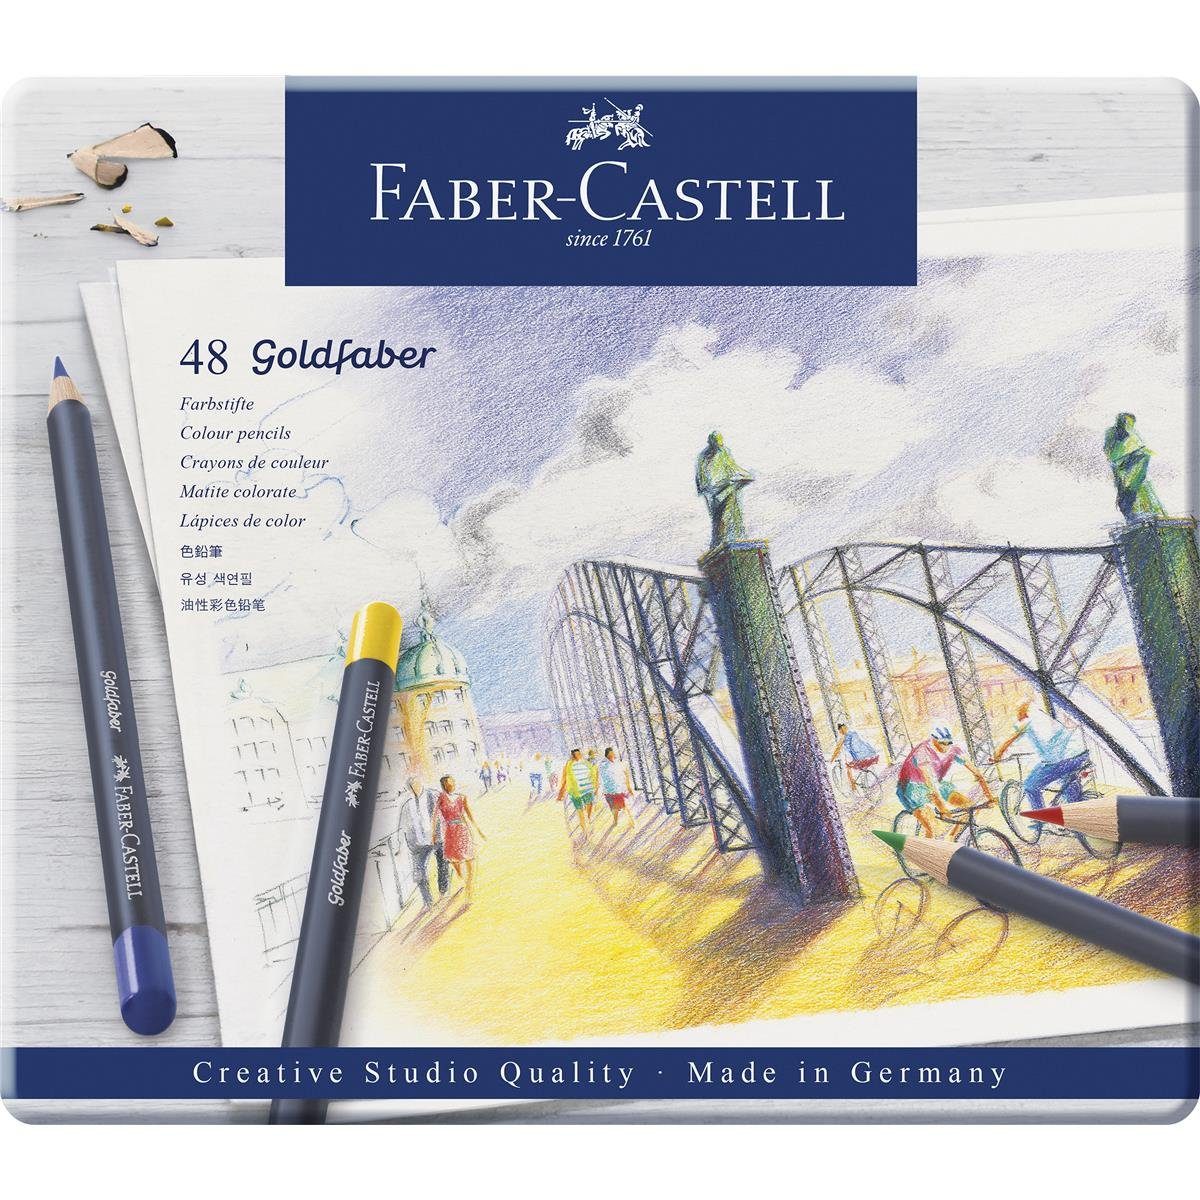 Faber-Castell Künstlerstift Faber-Castell - Farbstift 48-Metalletui Goldfaber